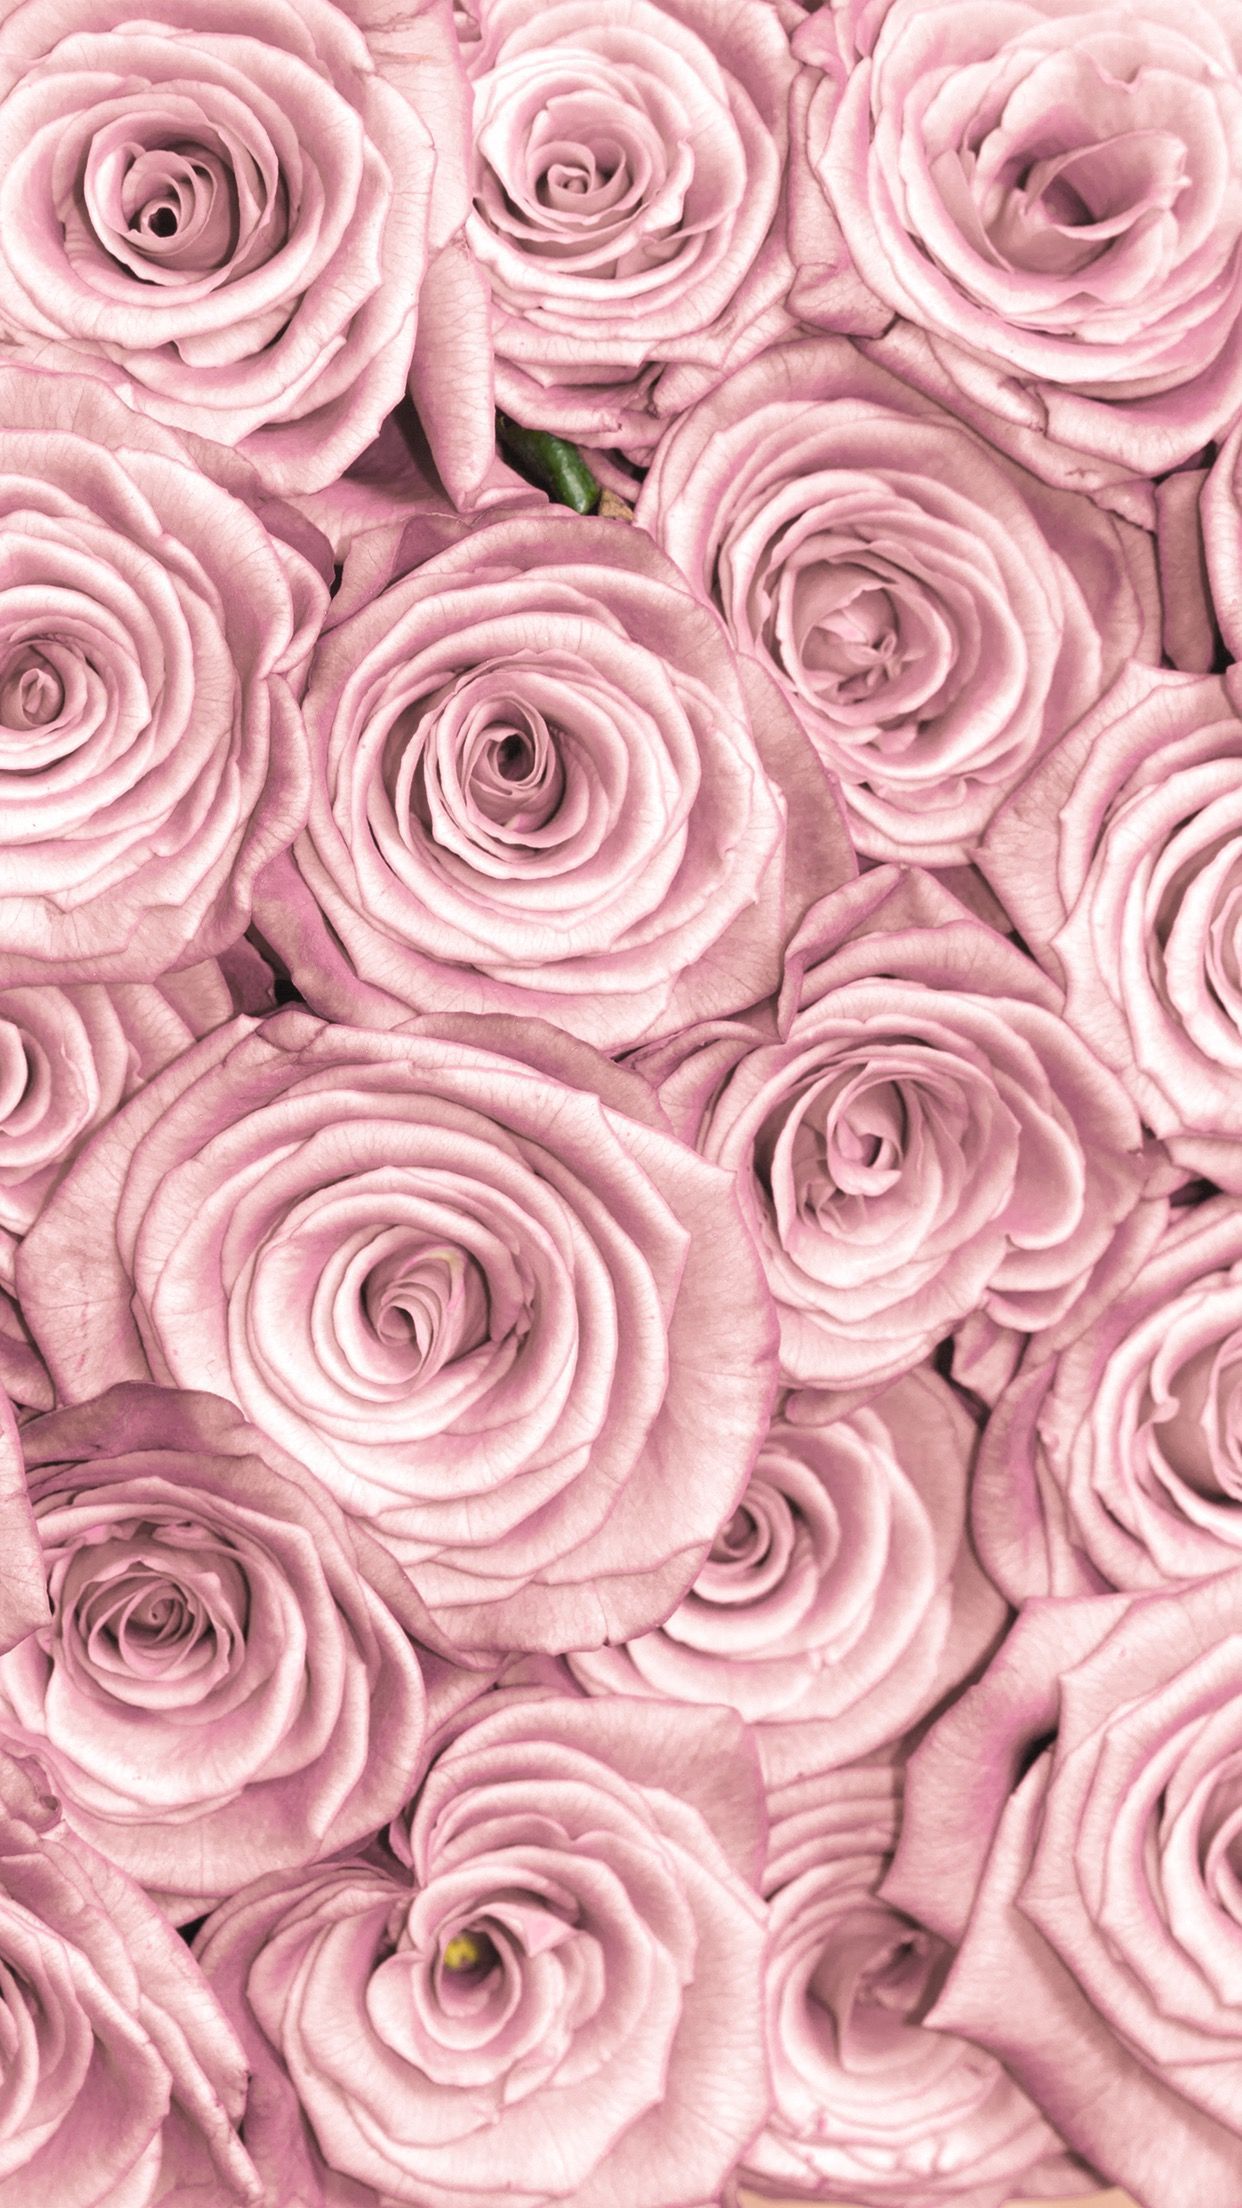 Bright Pink Rose Closeup Wallpaper  iPhone Android  Desktop Backgrounds